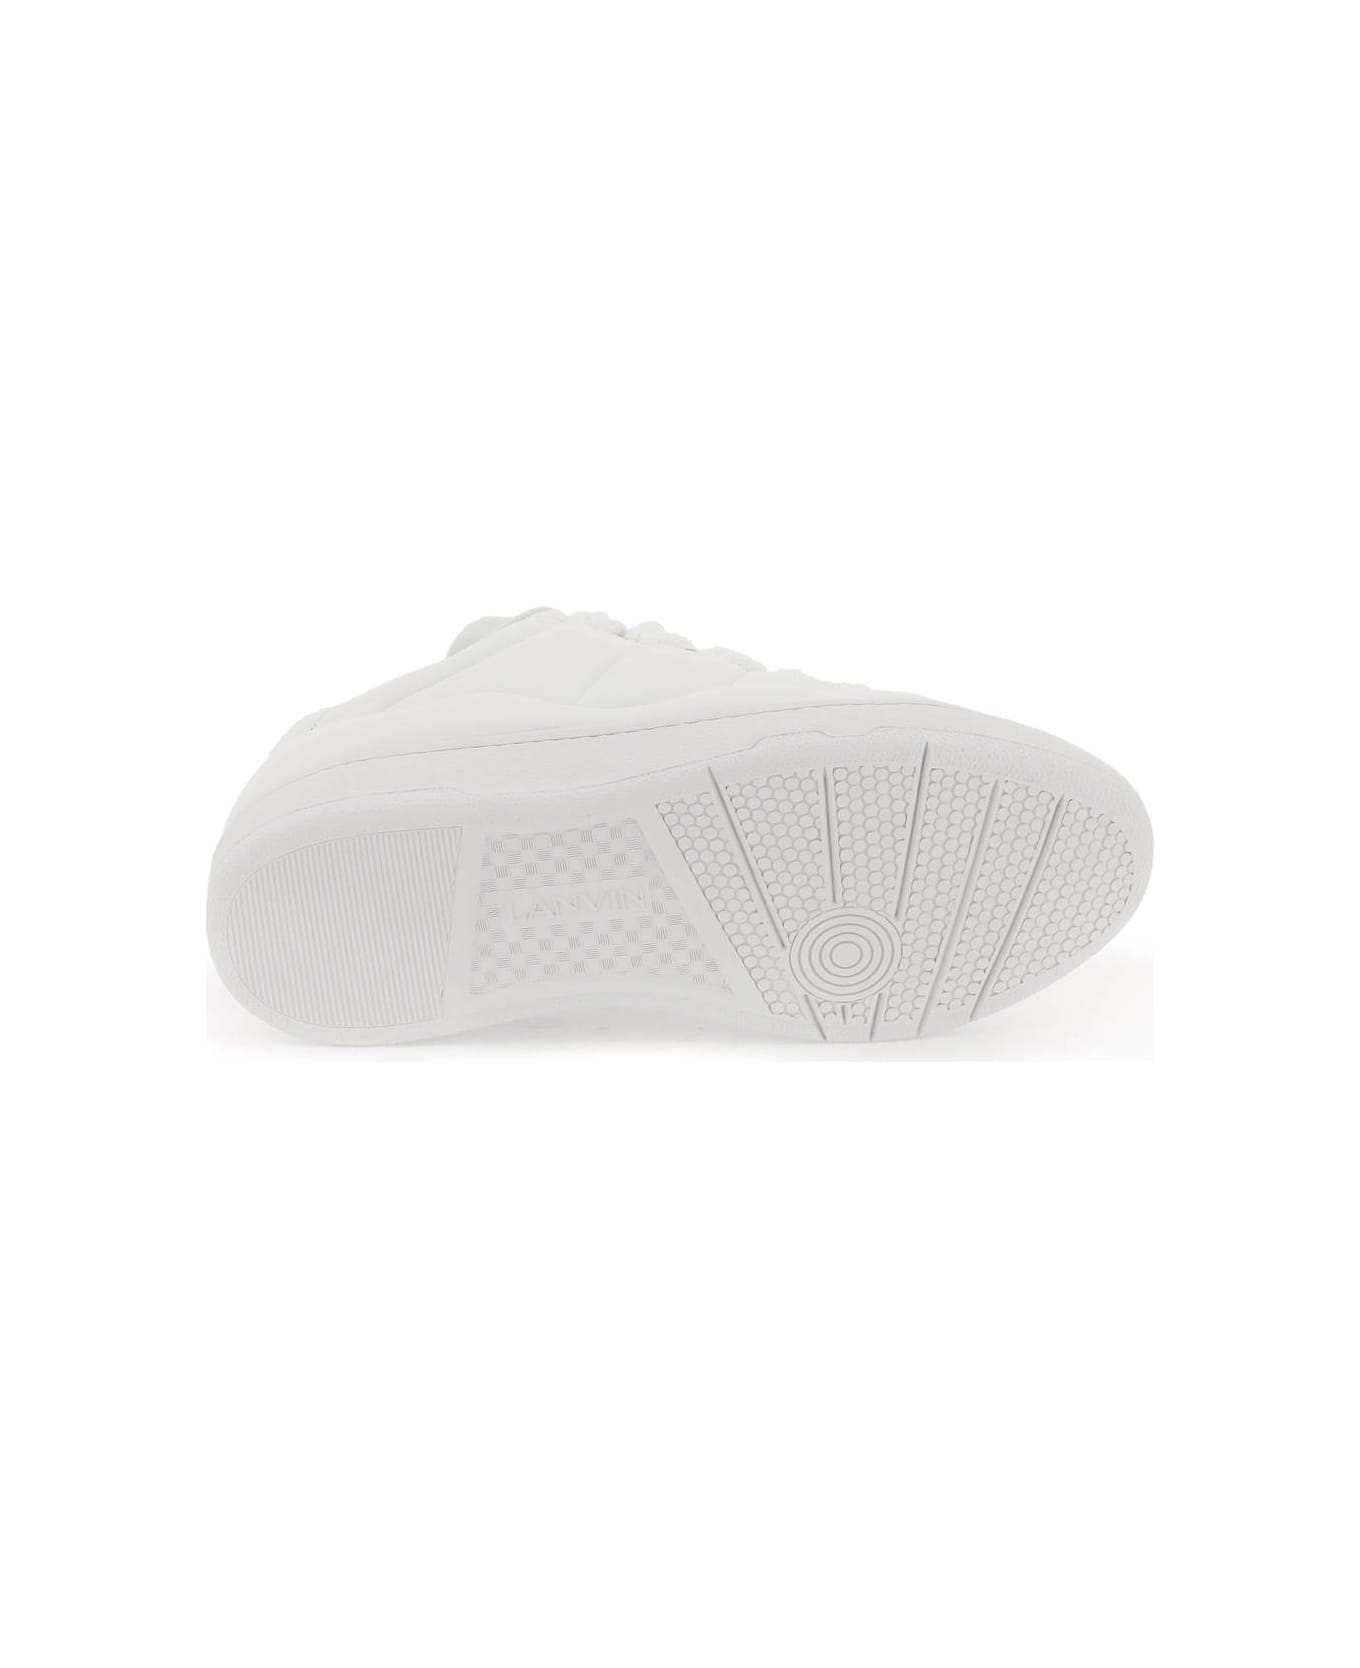 Lanvin Curb Xl Low Top Sneakers - WHITEWHITE